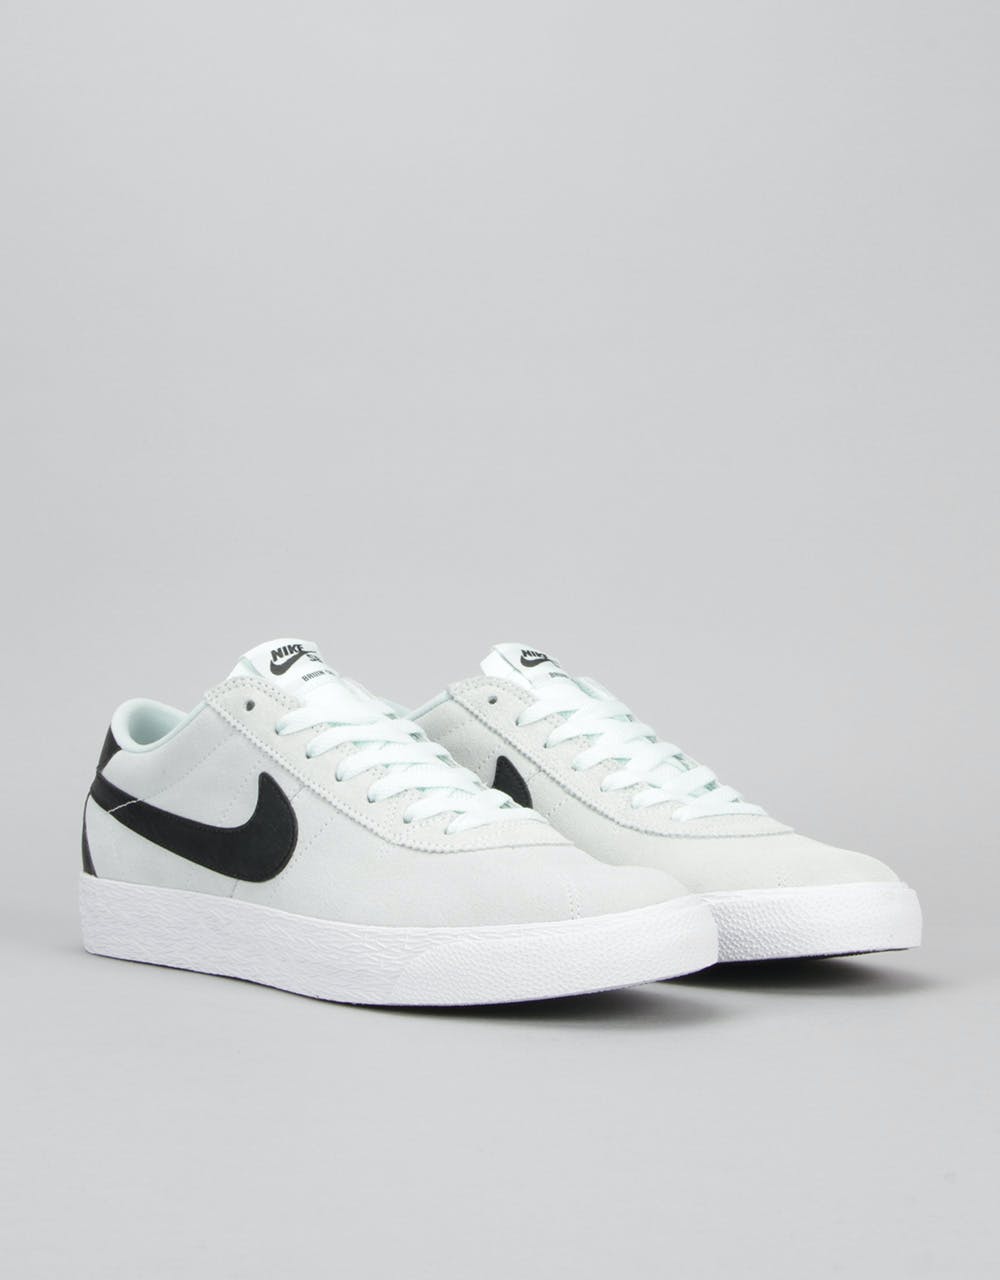 Nike SB Bruin Premium SE Skate Shoes - Barely Green/Black-White-Black